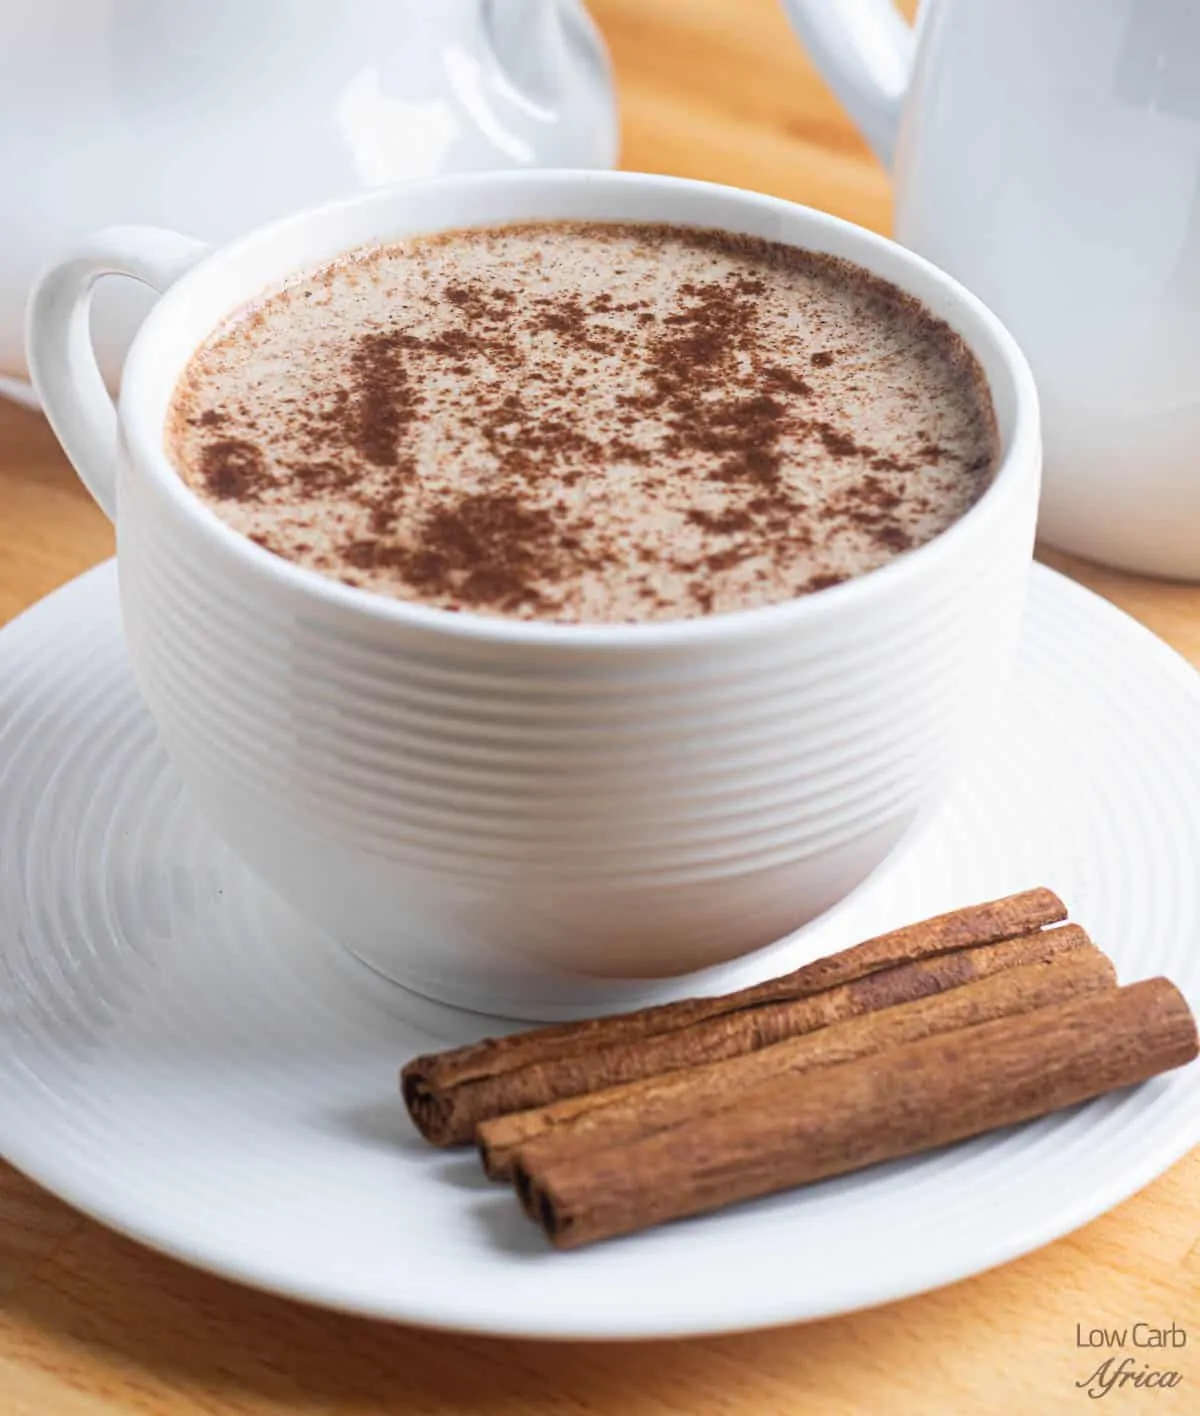 keto coffee with cinnamon sticks